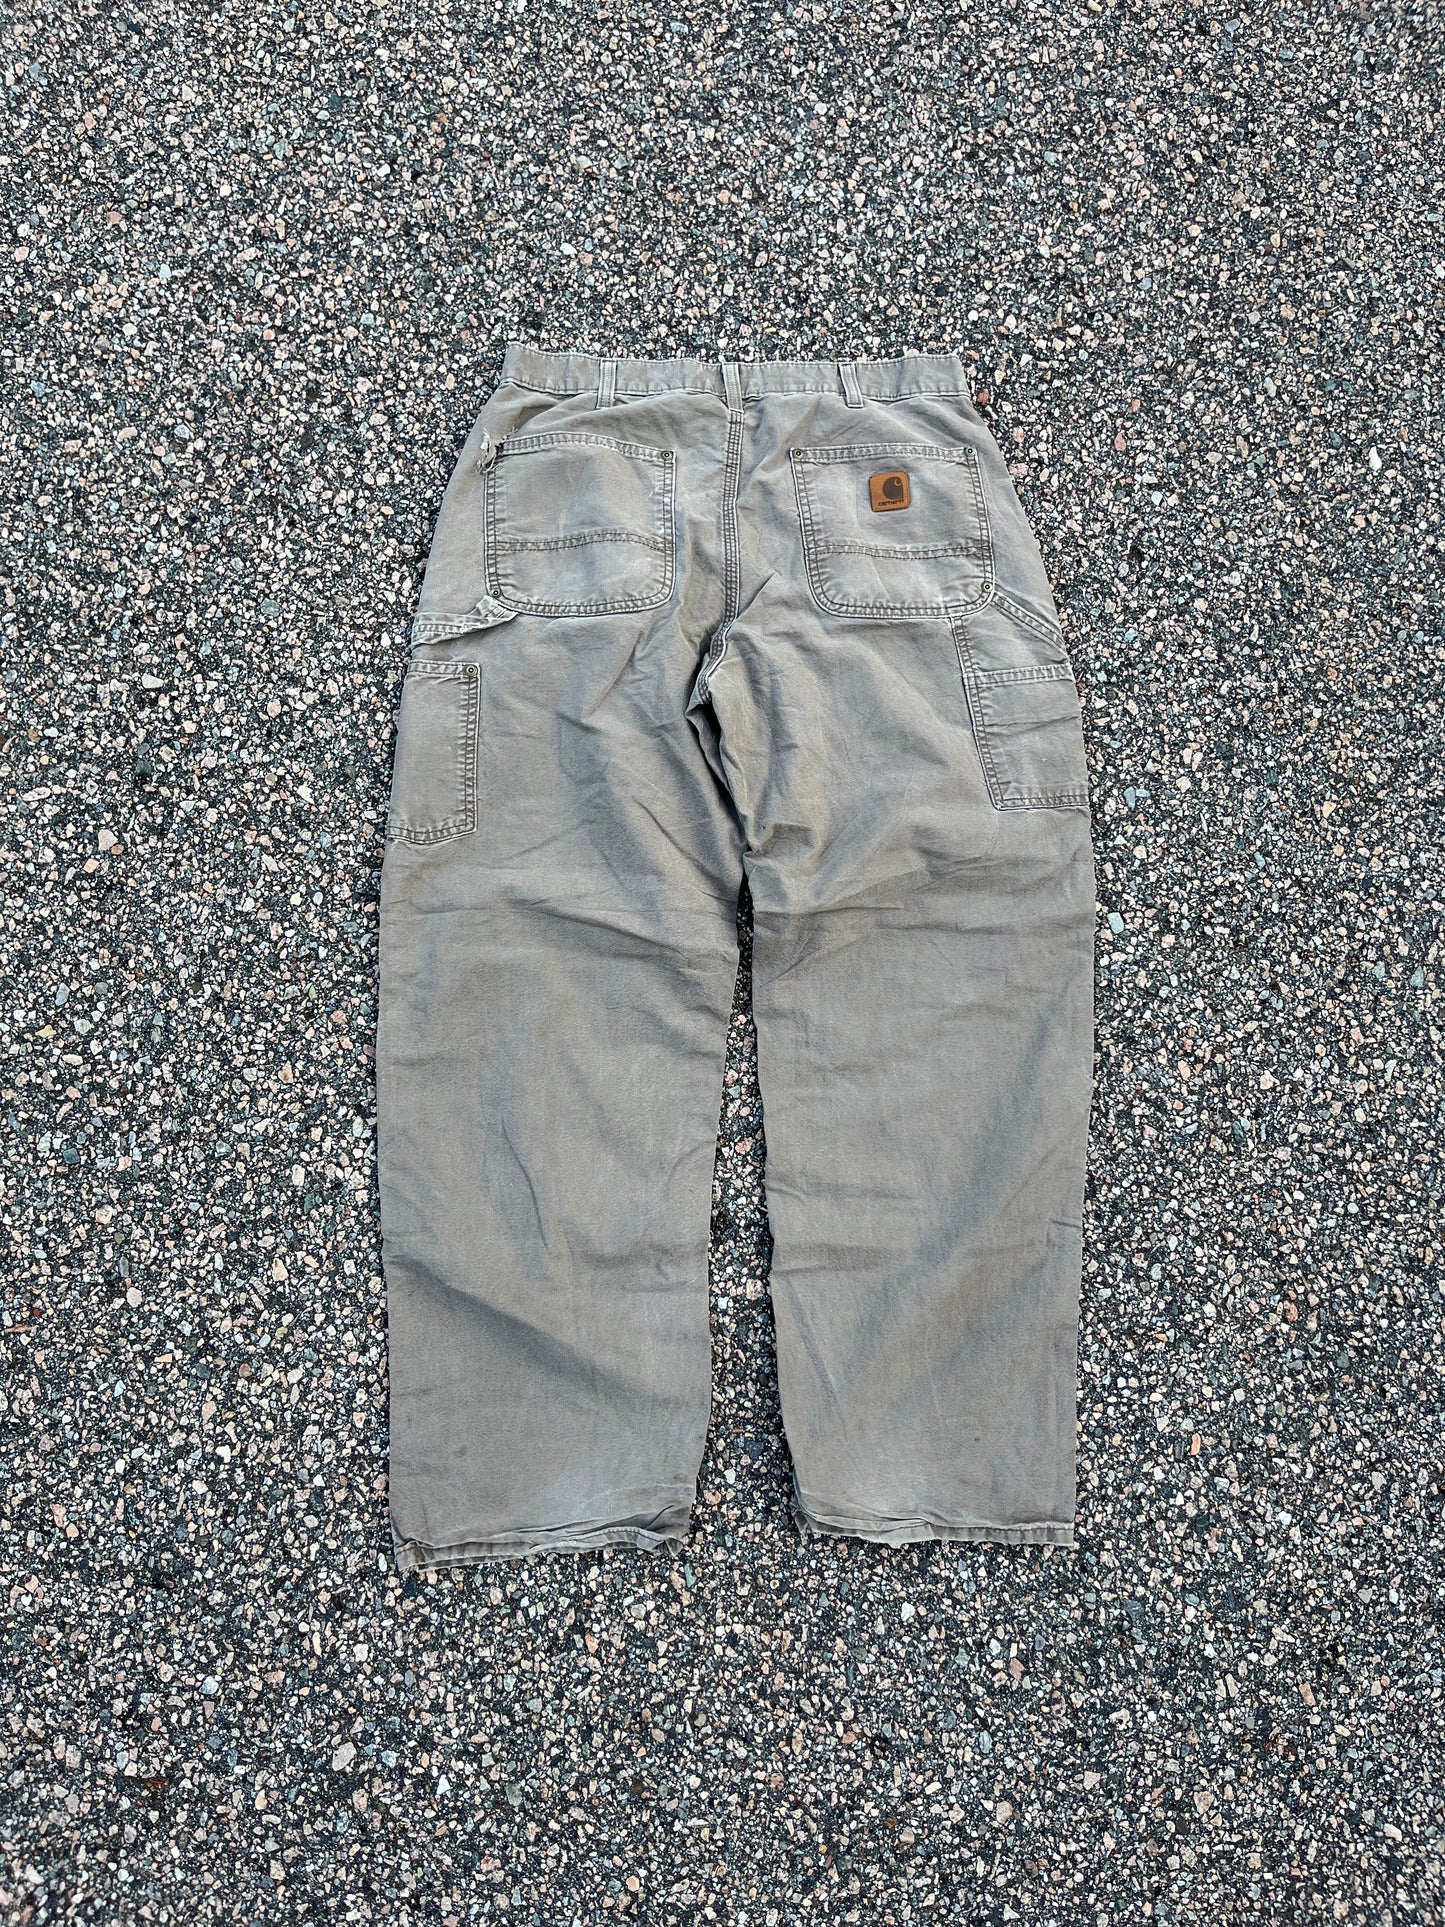 Faded Light Brown Carhartt Double Knee Pants - 31 x 28